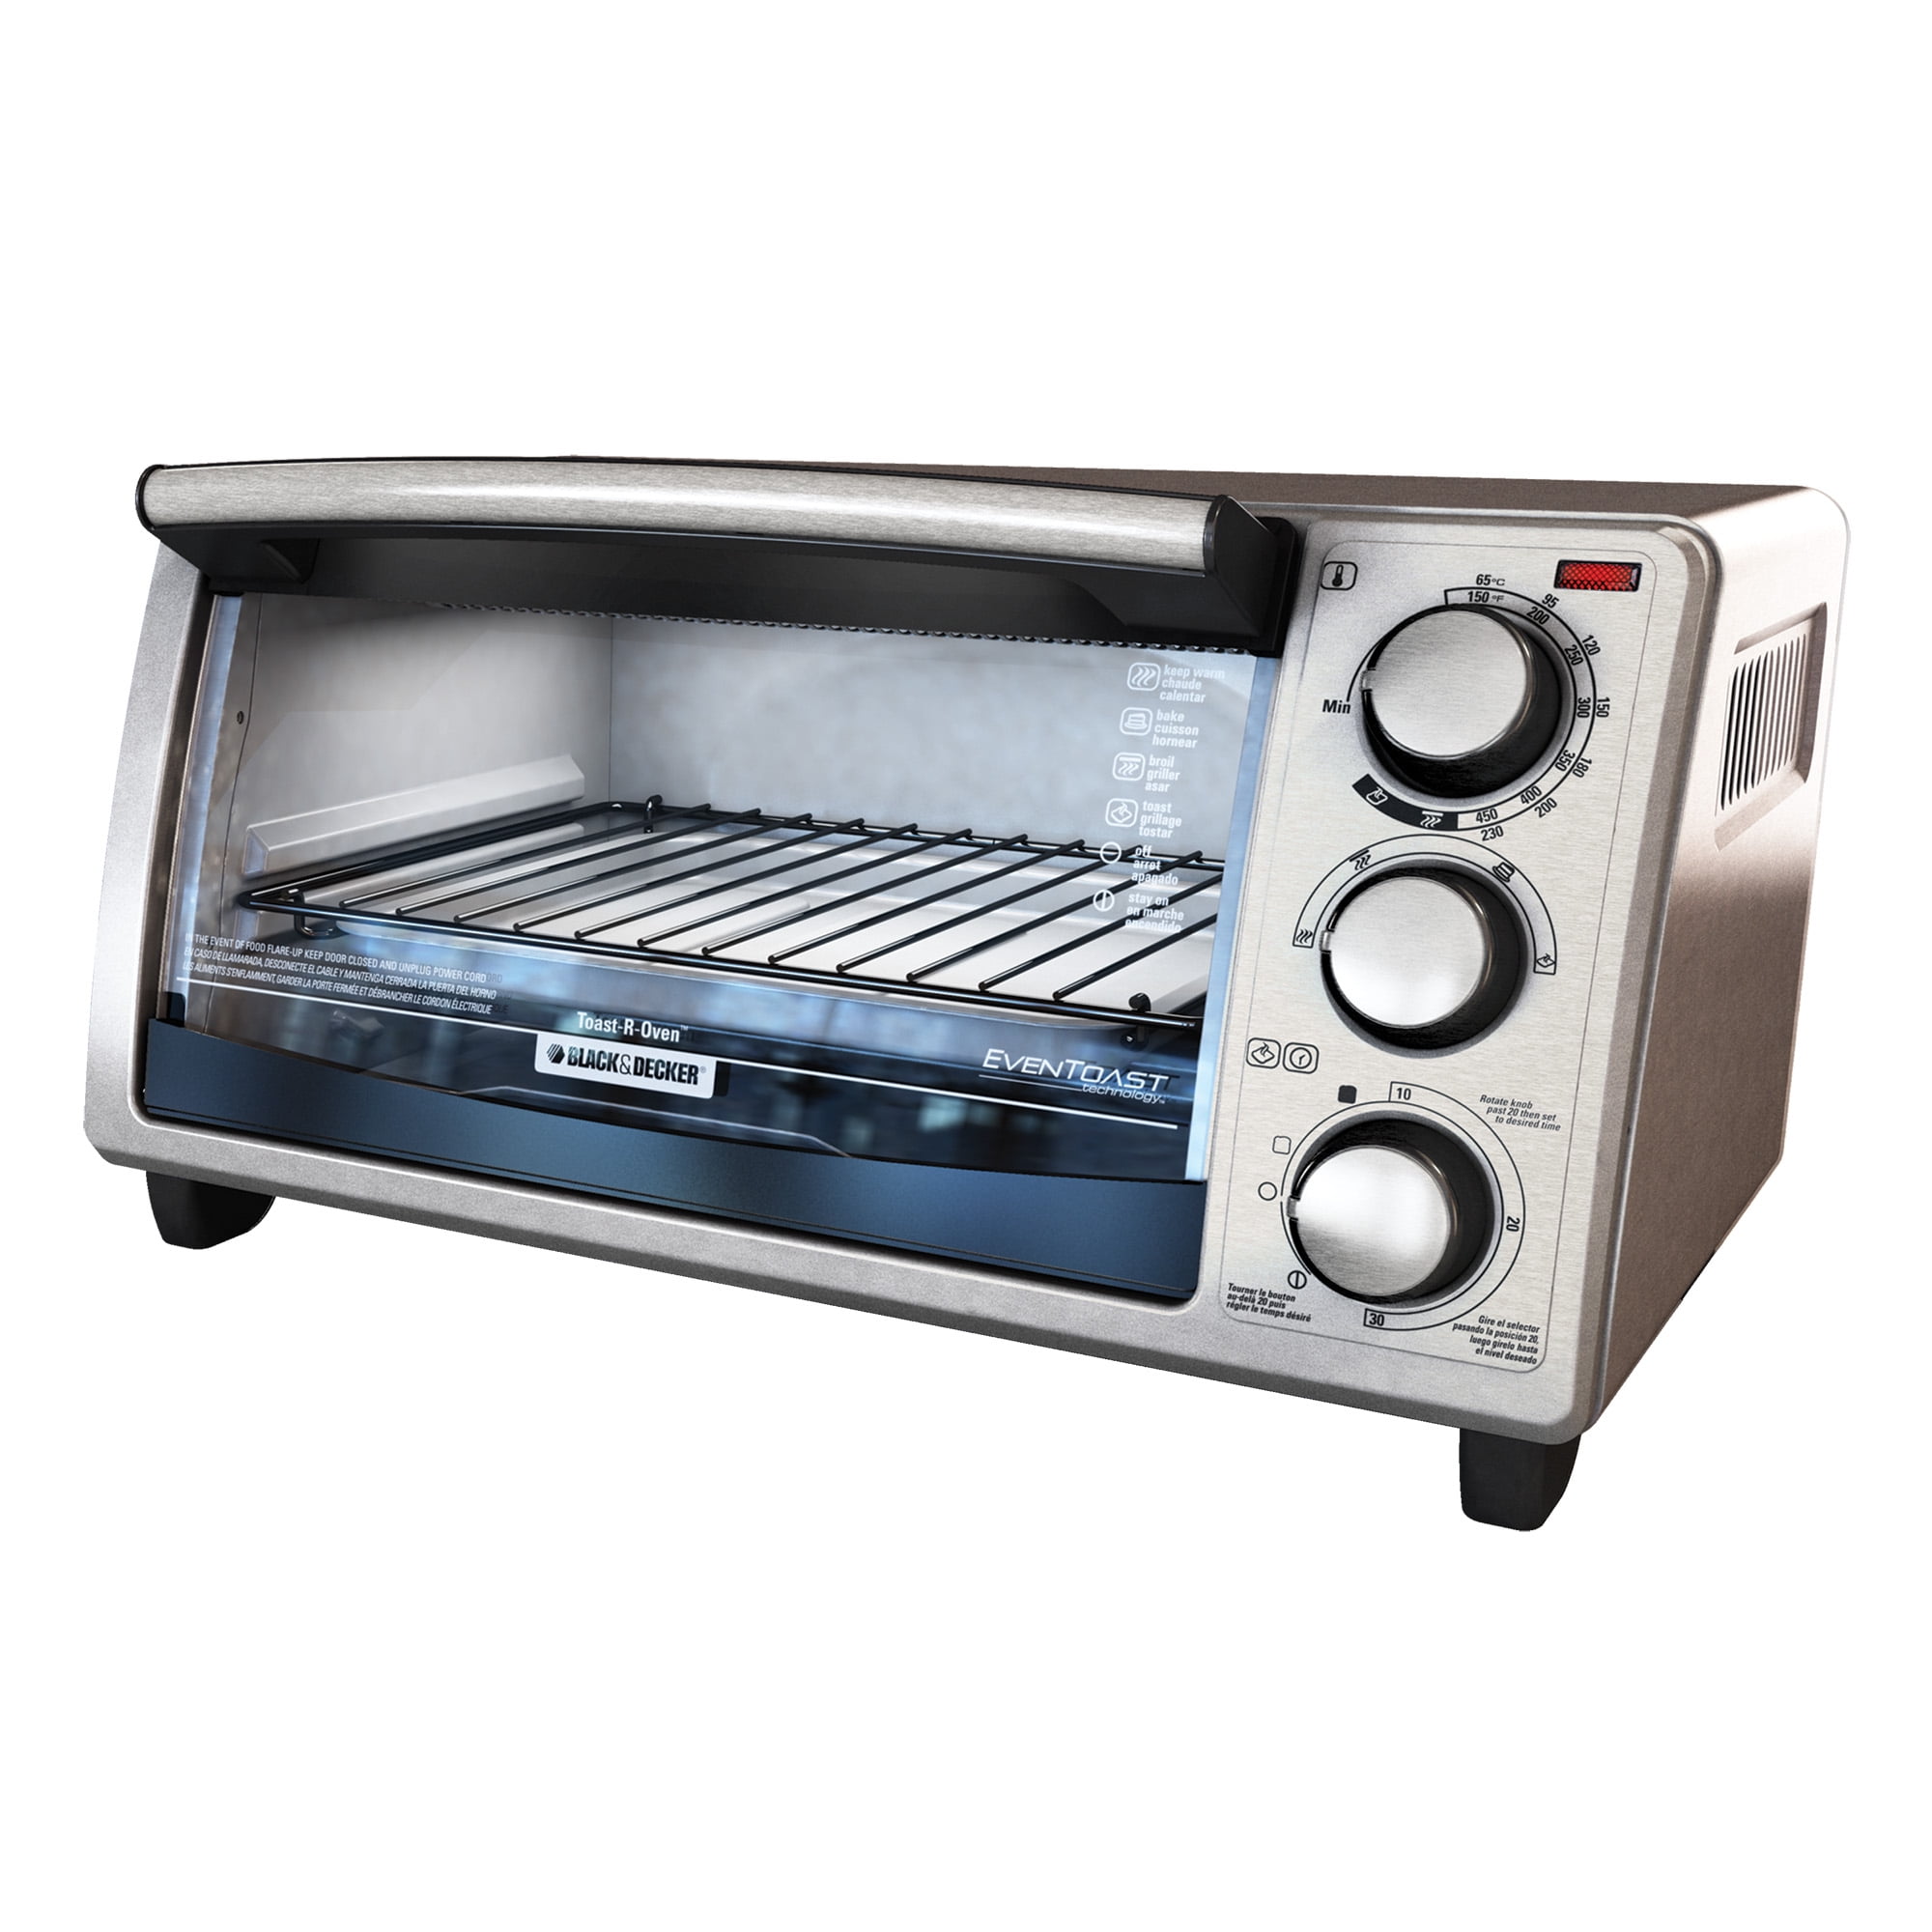 Black & Decker 4 Slice Stainless Steel Toaster Oven 